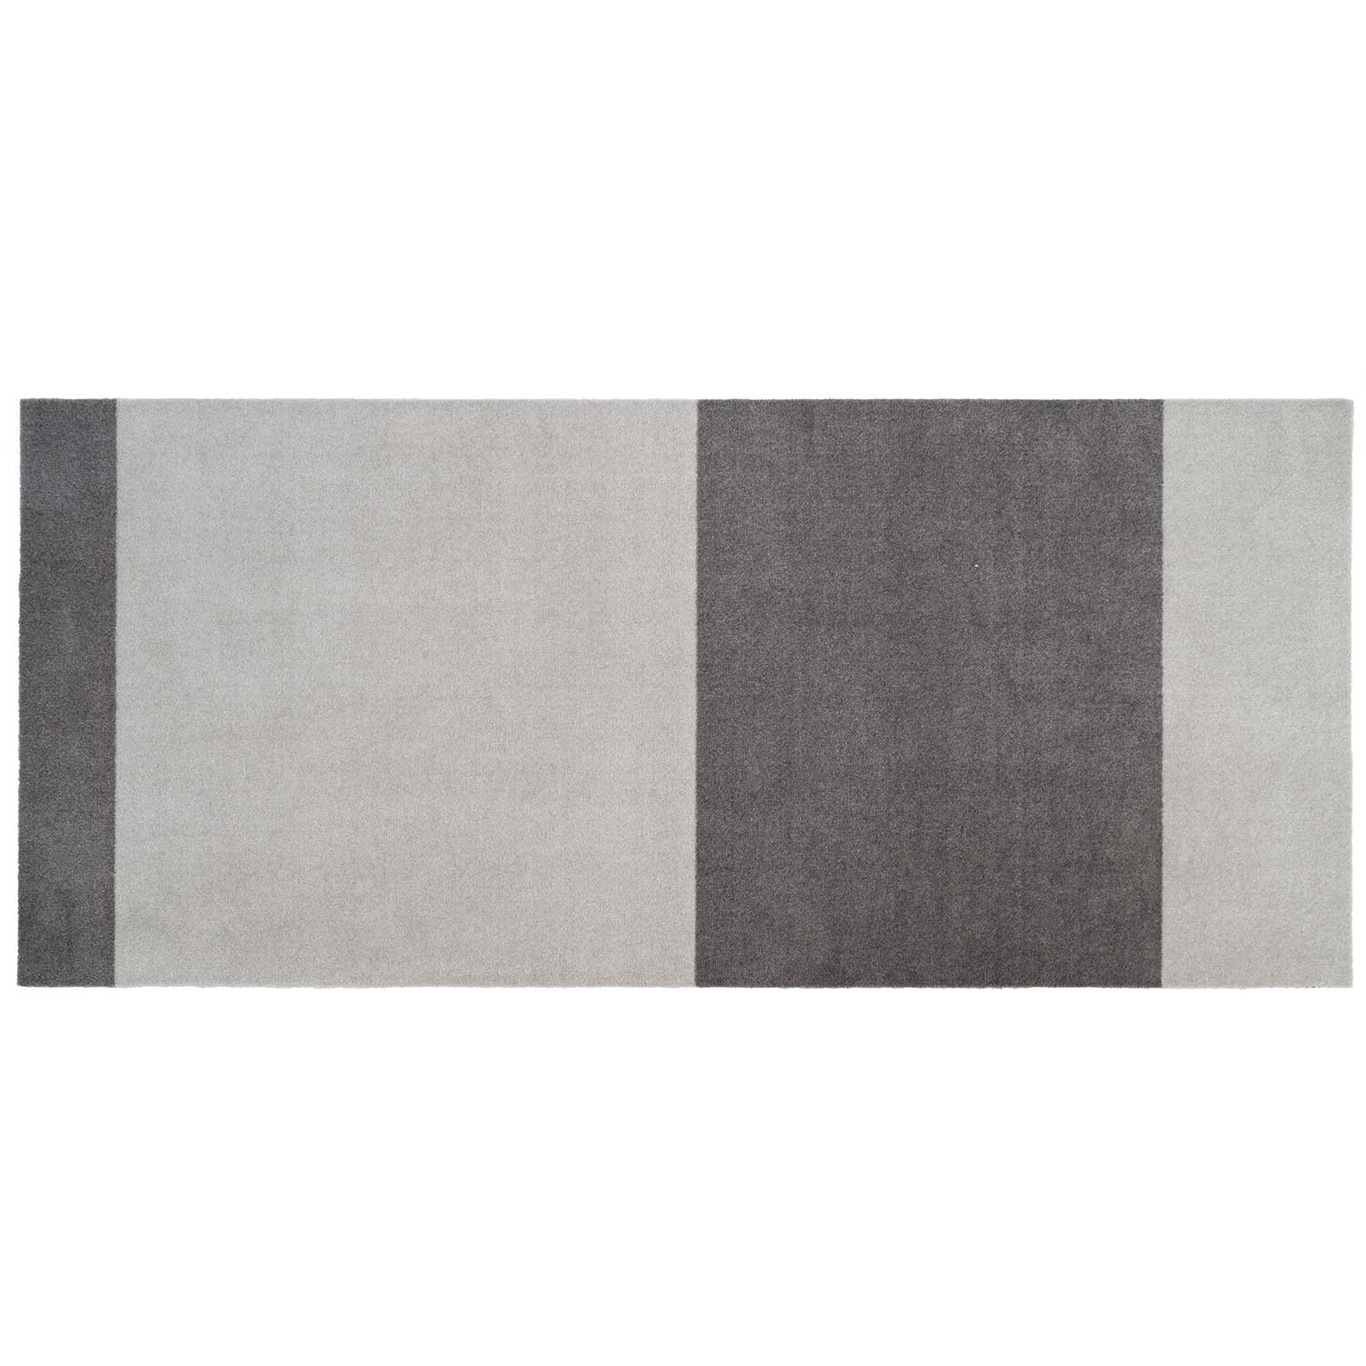 Stripes Rug Steel Grey / Light Grey, 90x200 cm